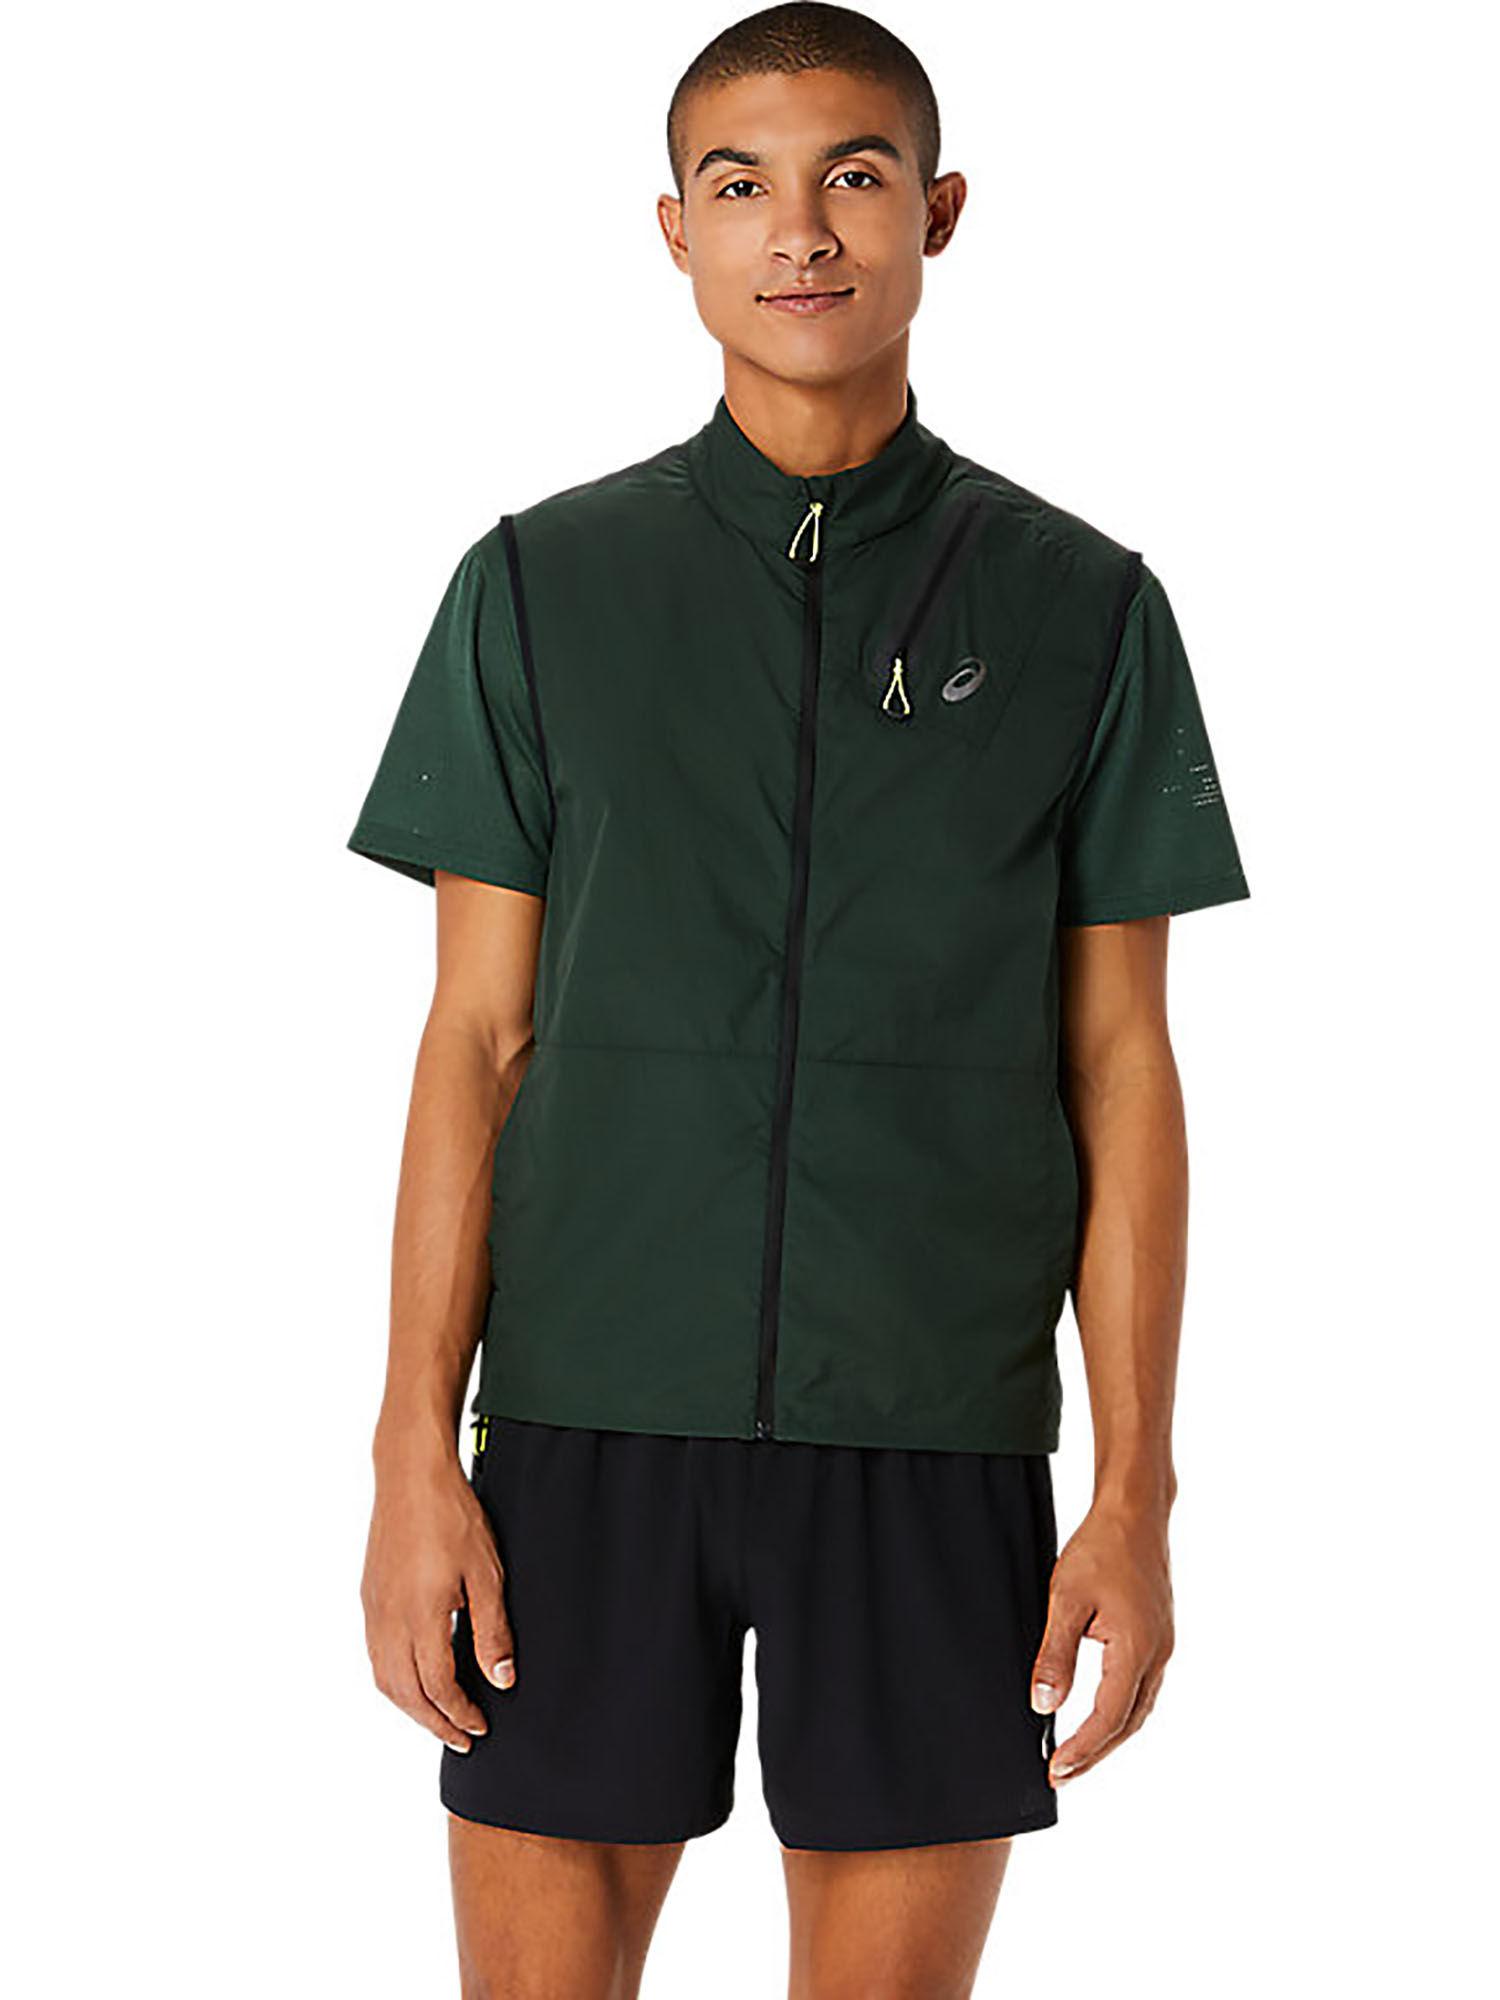 meta run packable green mens vest jacket